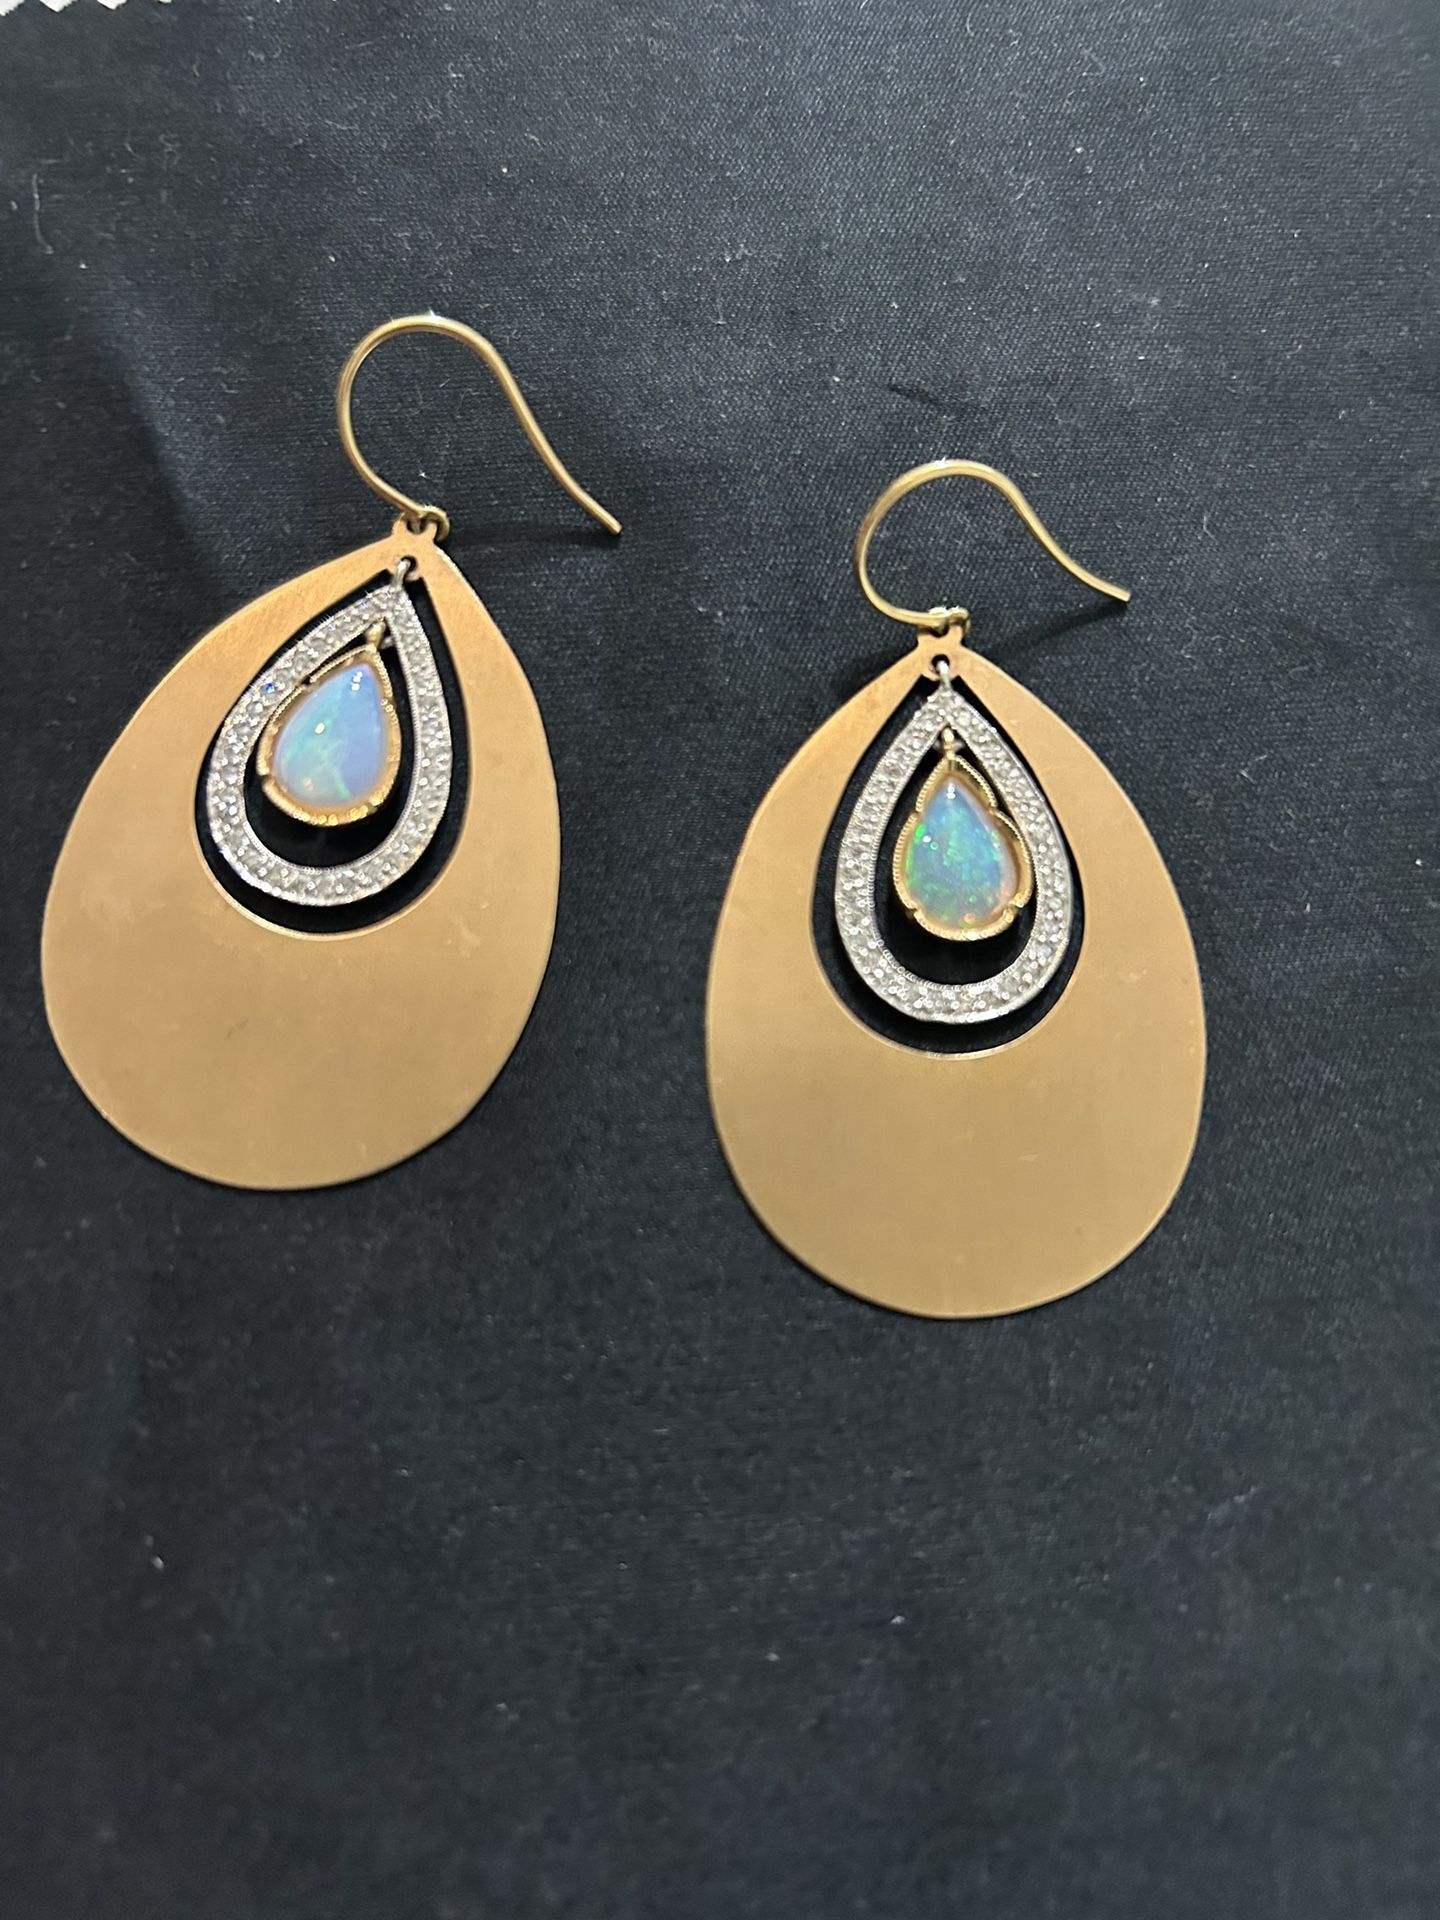 Irene Neuwirth 18k gold, opal, and diamond drop earrings